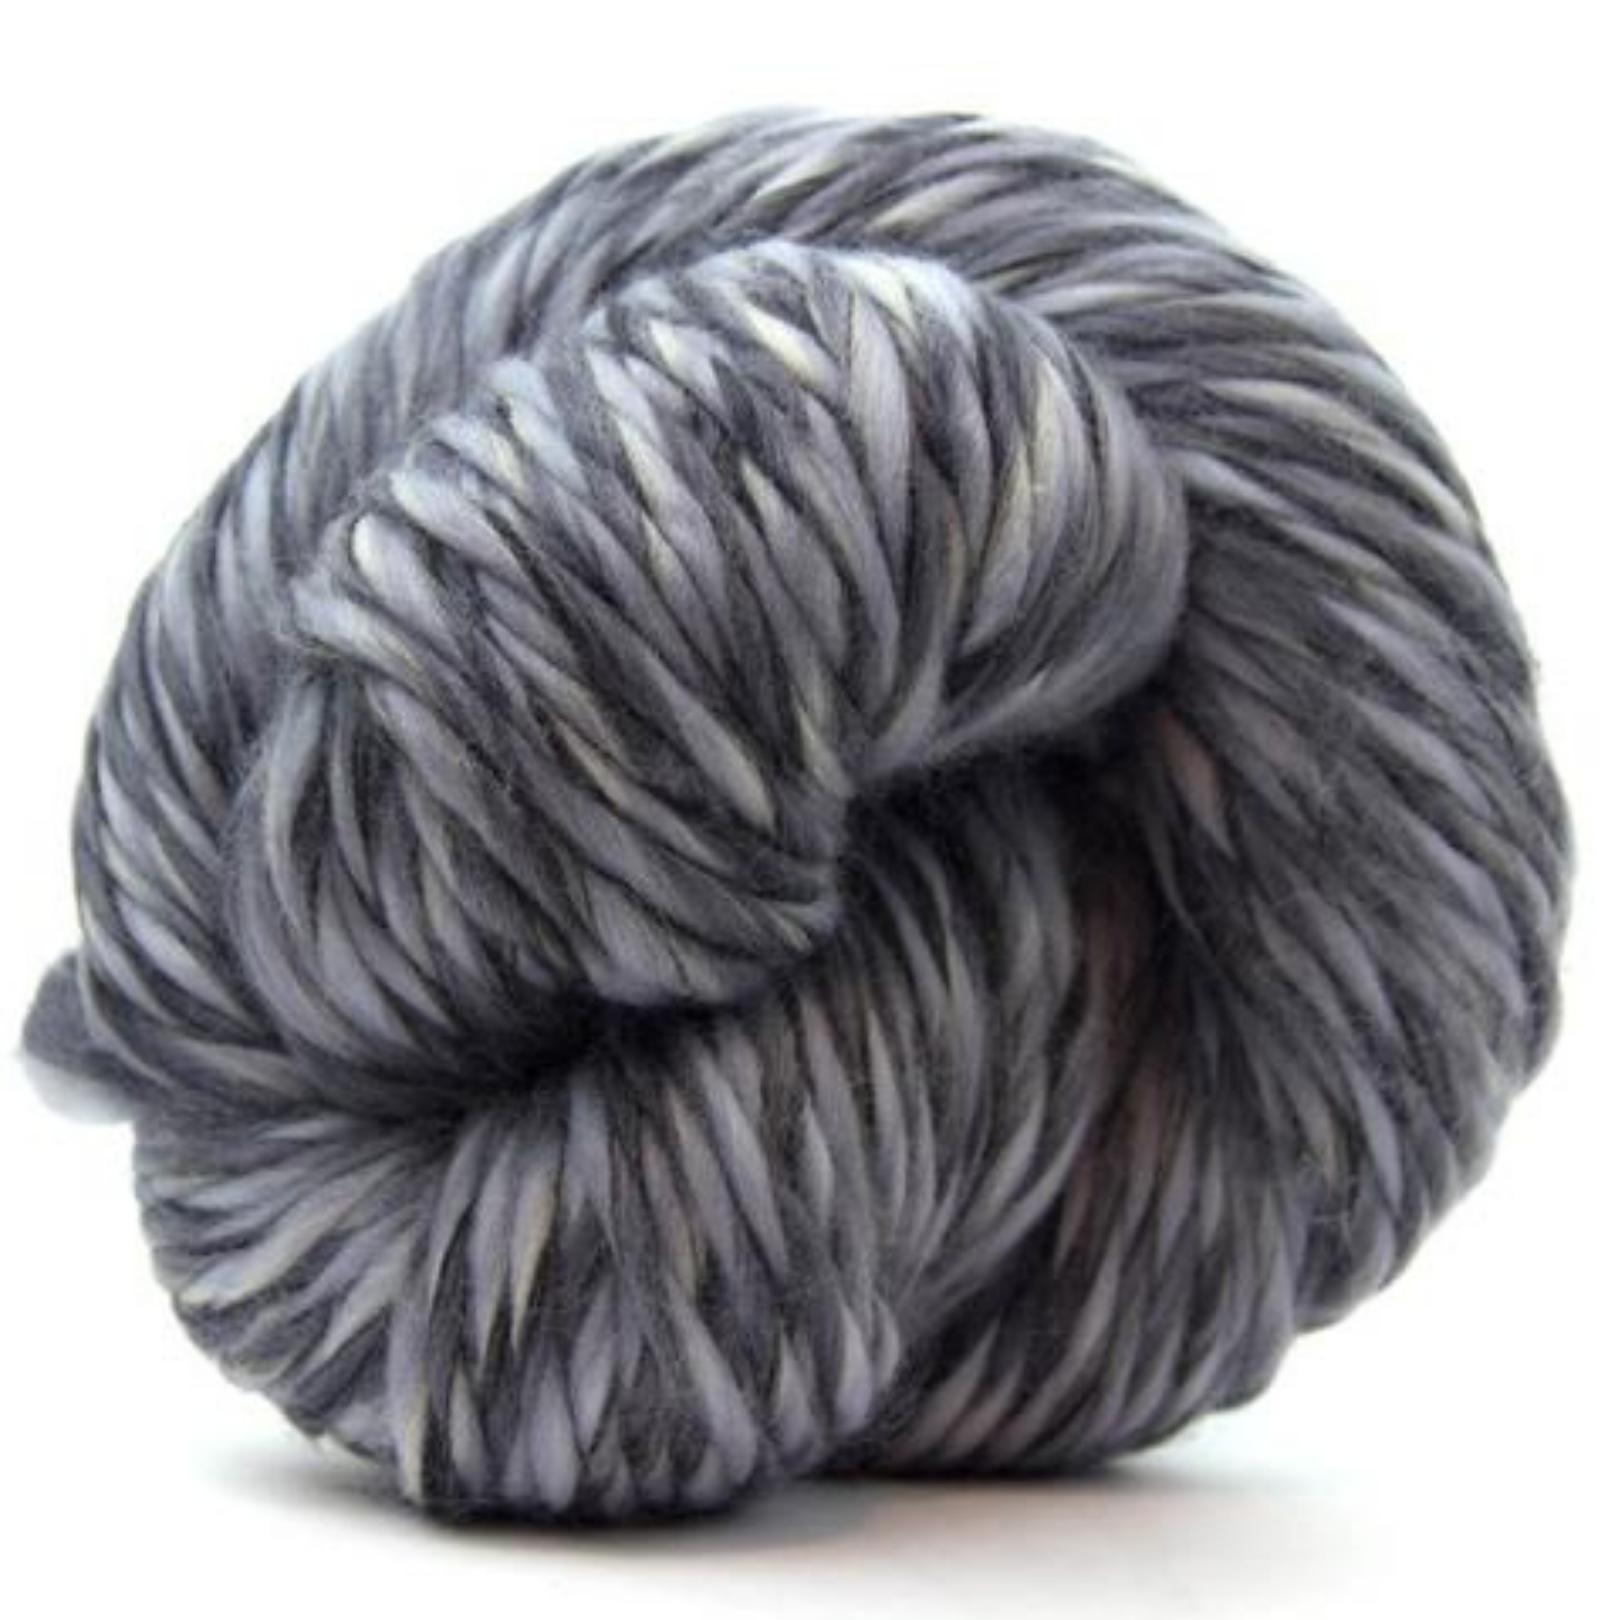 Premium Super Bulky (Chunky) Weight Multicolored Merino Yarn-Yarn-Revolution Fibers-Tempest Gray-Revolution Fibers